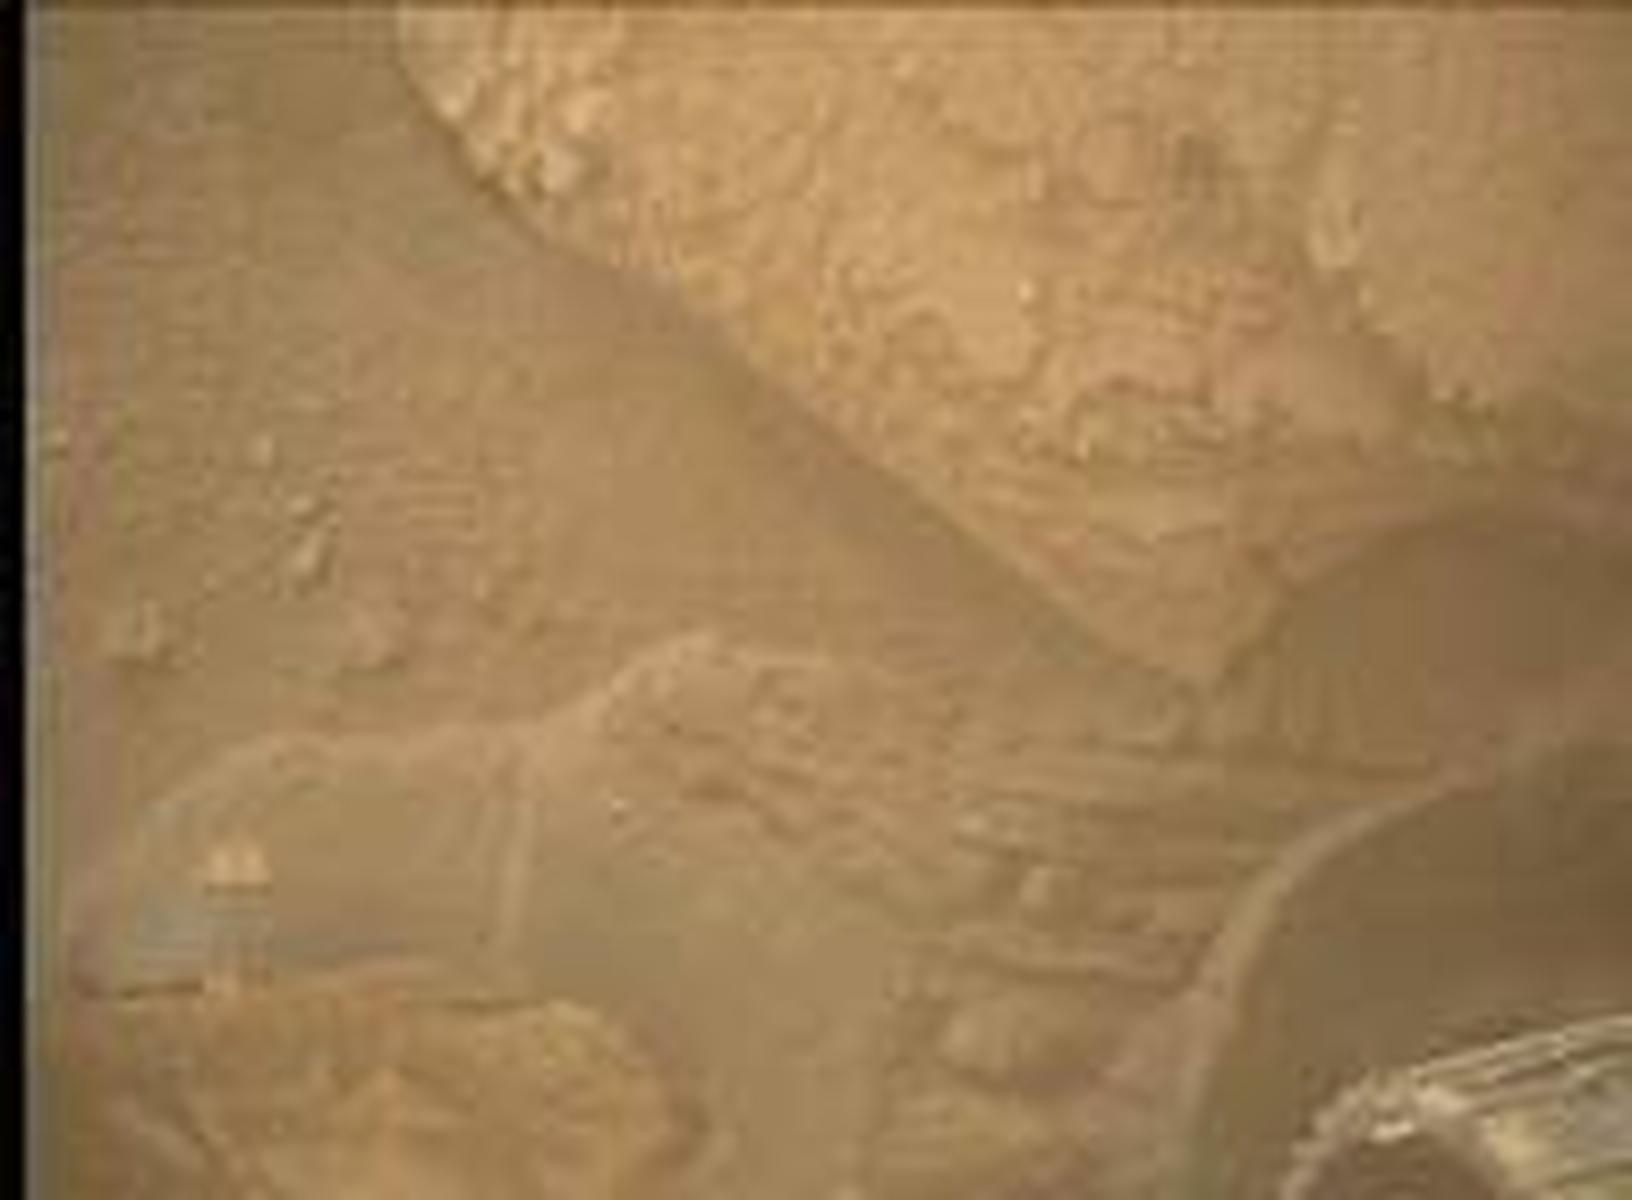 Mars Descent Imager